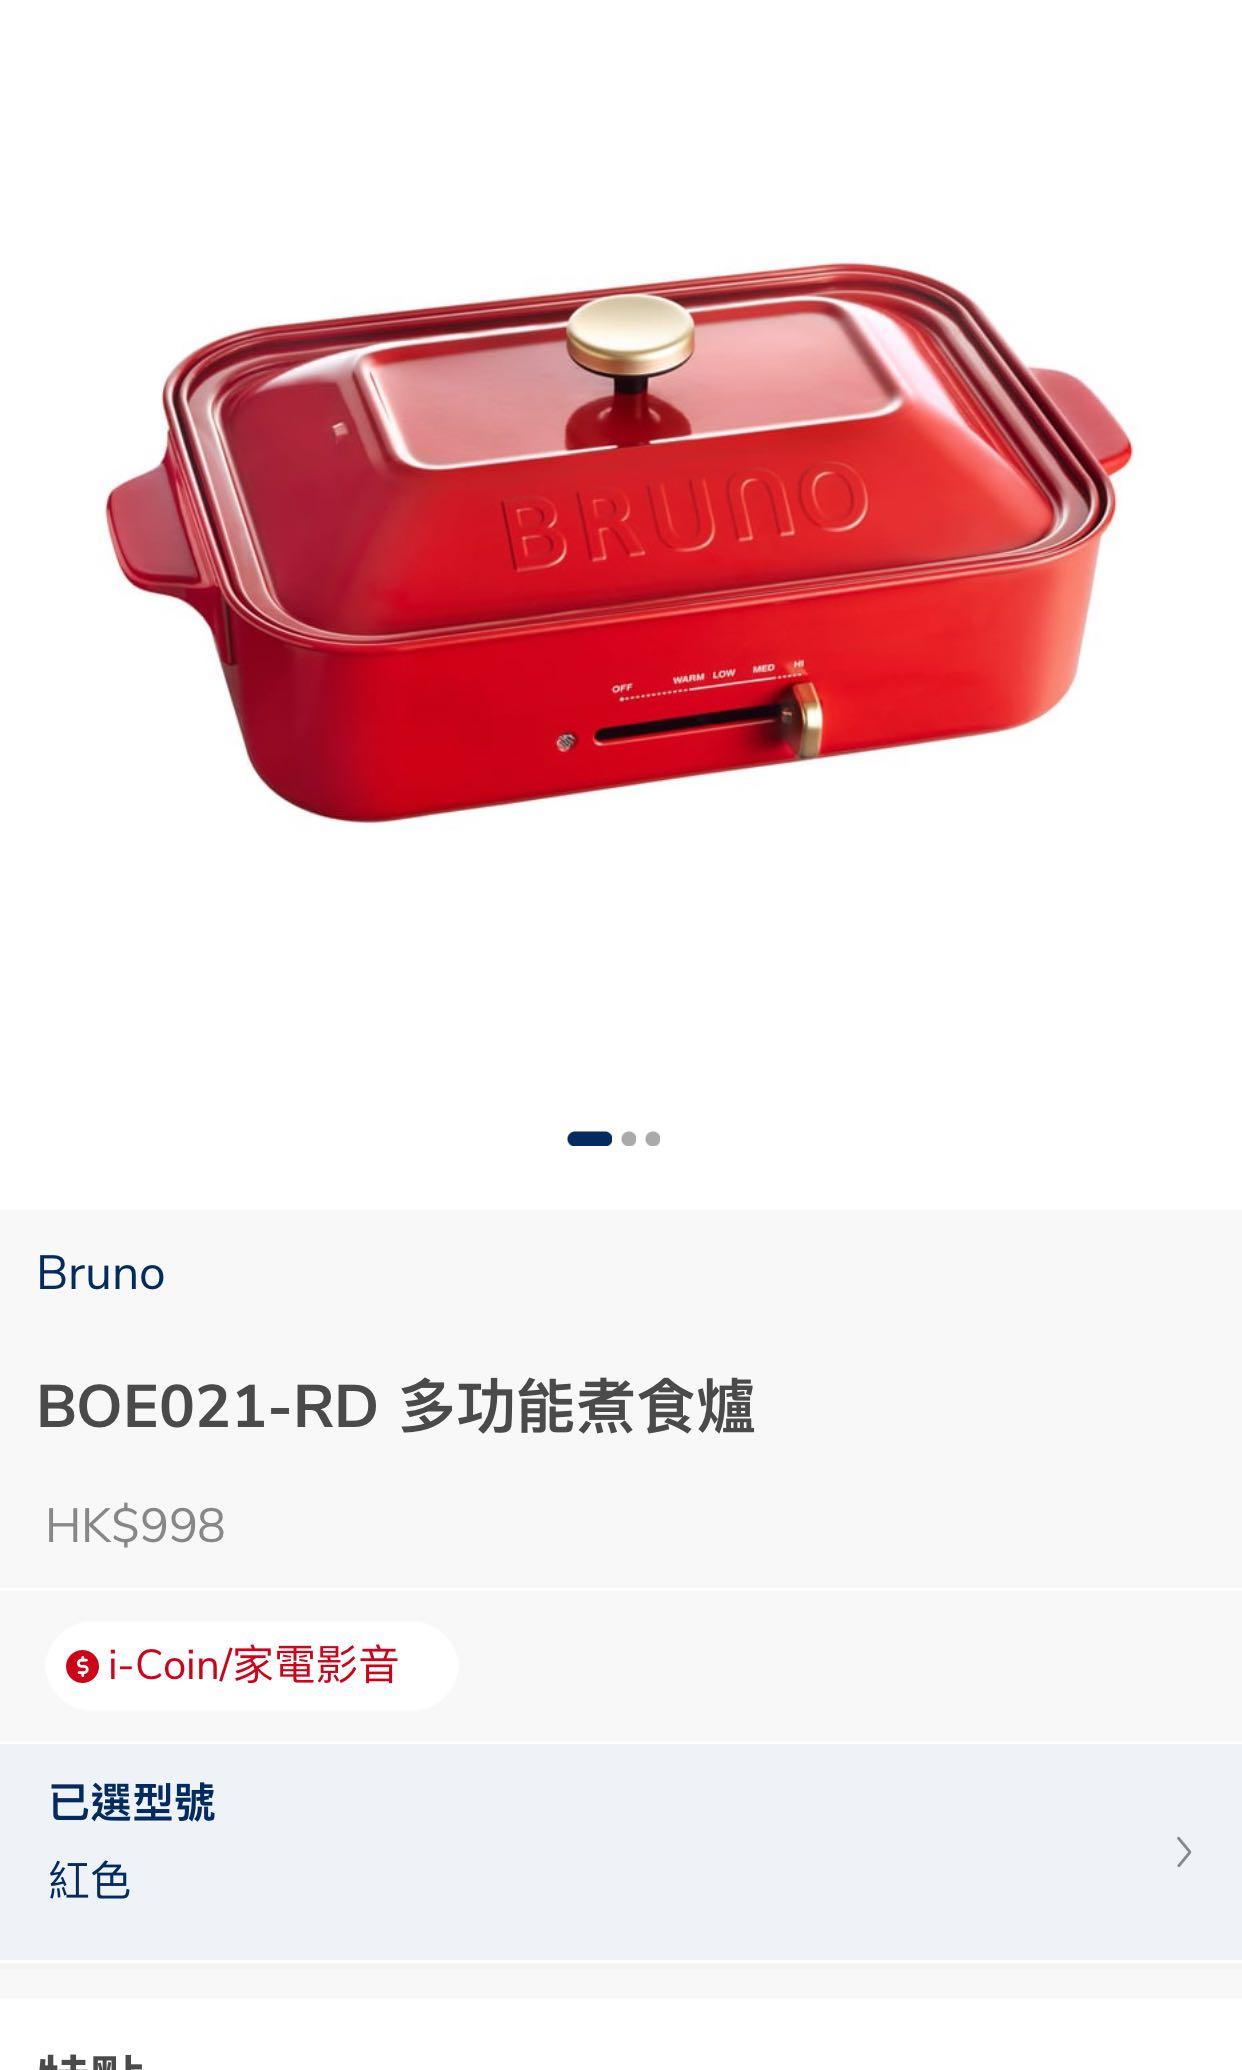 Bruno BOE021-RD多功能電熱鍋, 家庭電器, 廚房電器, 焗爐及多士爐